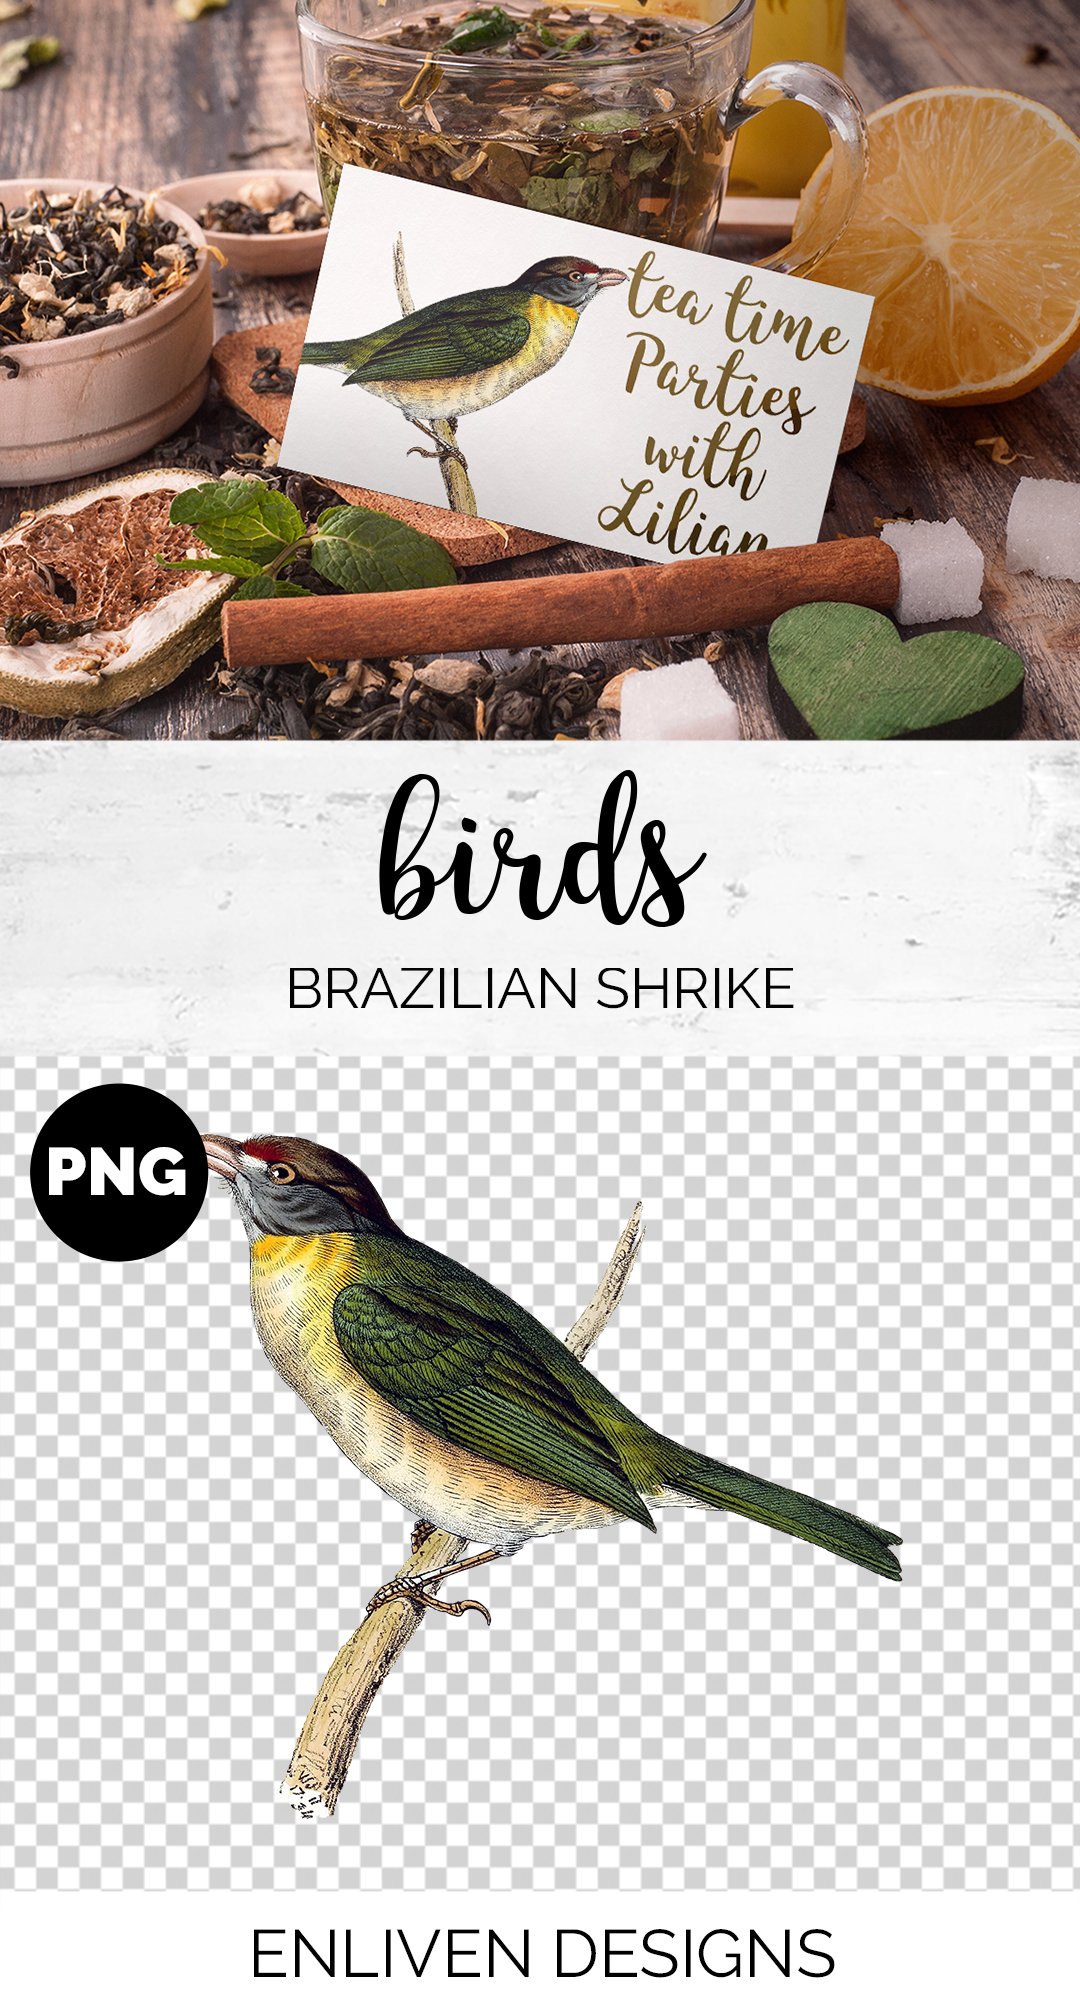 Shrike Brazilian Bird Watercolor preview image.